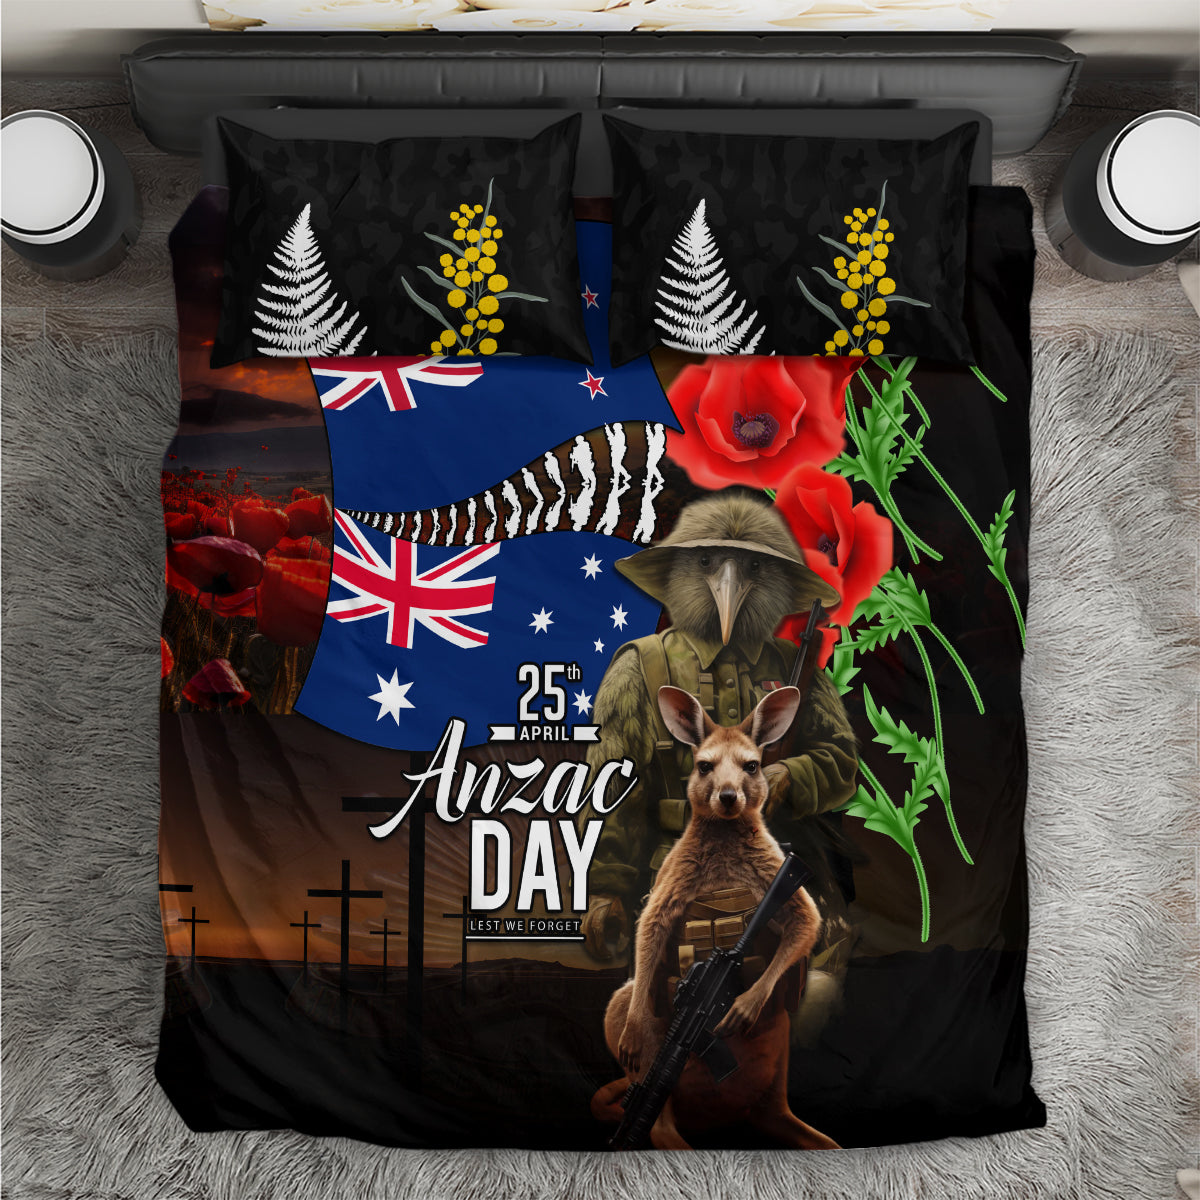 New Zealand and Australia ANZAC Day Bedding Set National Flag mix Kiwi Bird and Kangaroo Soldier Style